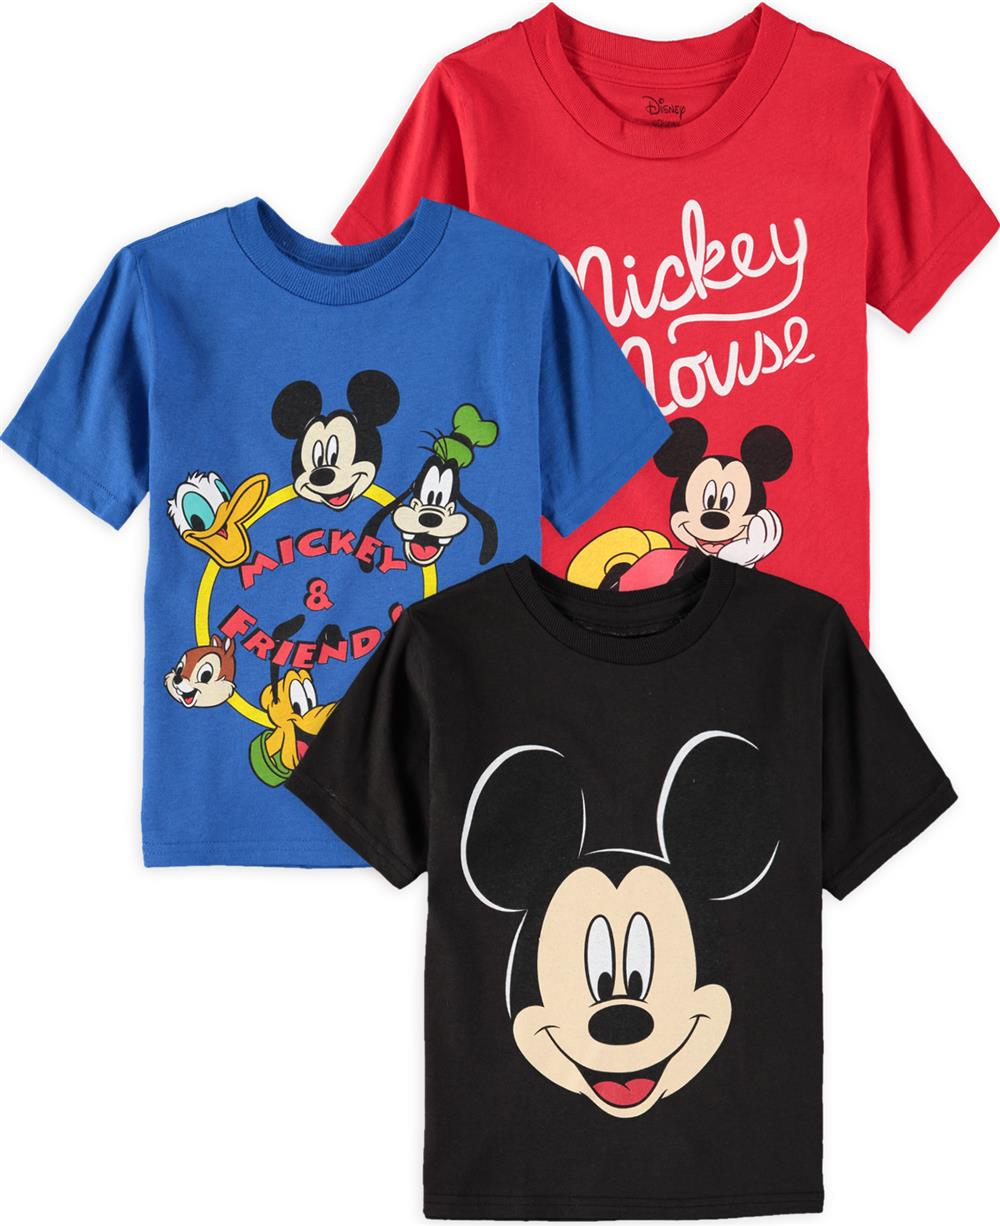 Disney Boys' 2T-4T Mickey Mouse 3 Pack T-Shirt Bundle